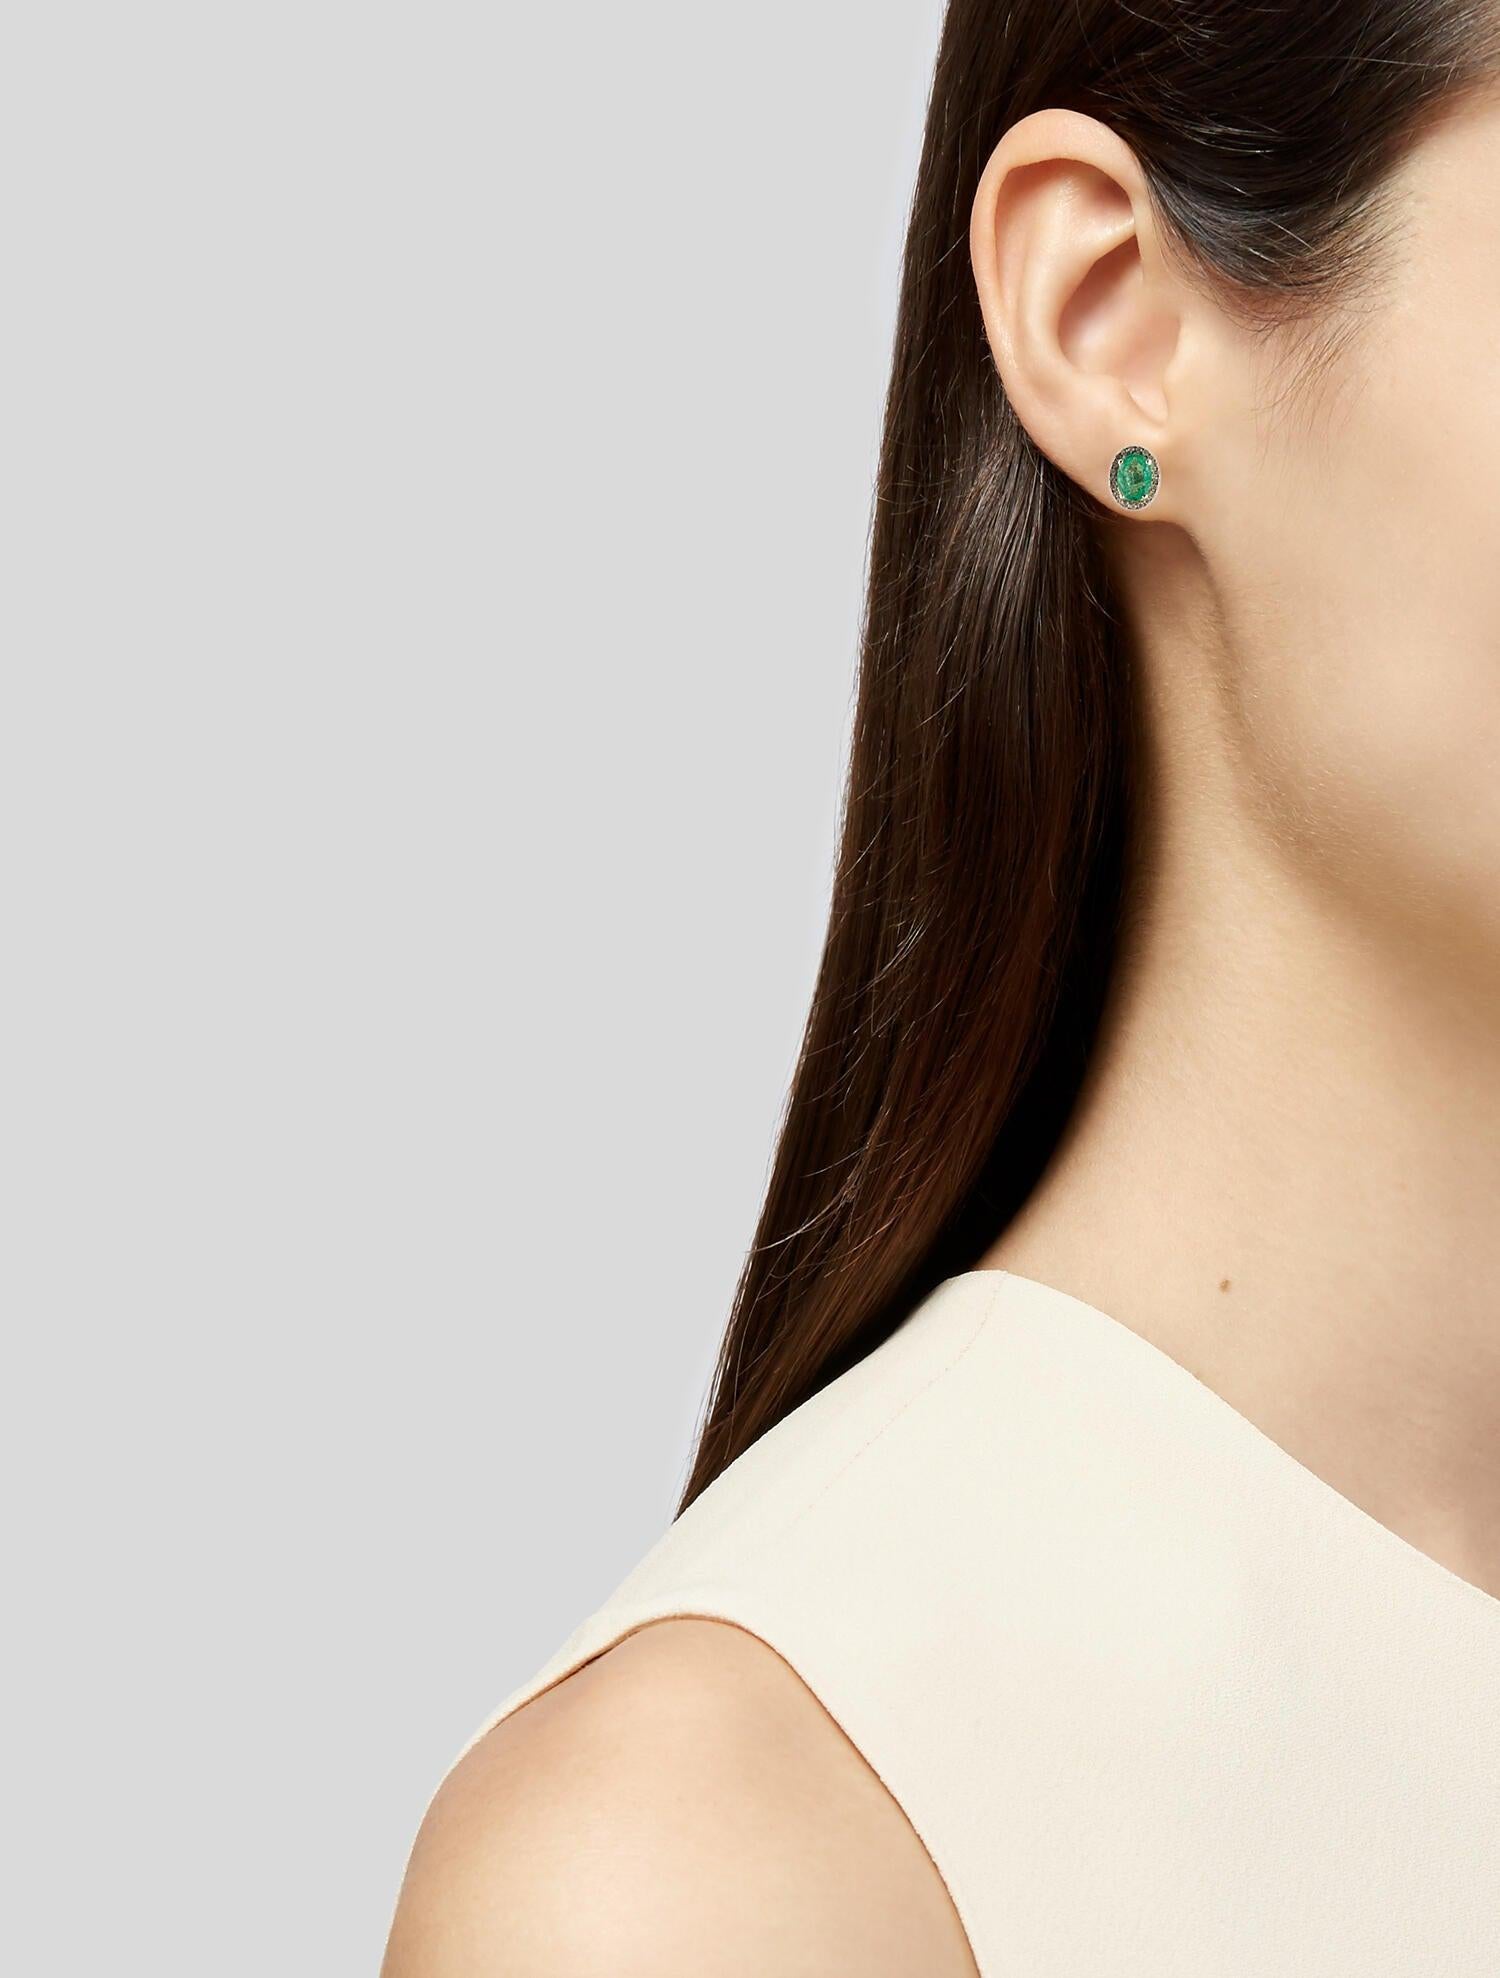 Chic 14K 1.56ctw Emerald & Diamond Studs - Elegant Gemstone Earrings For Sale 1